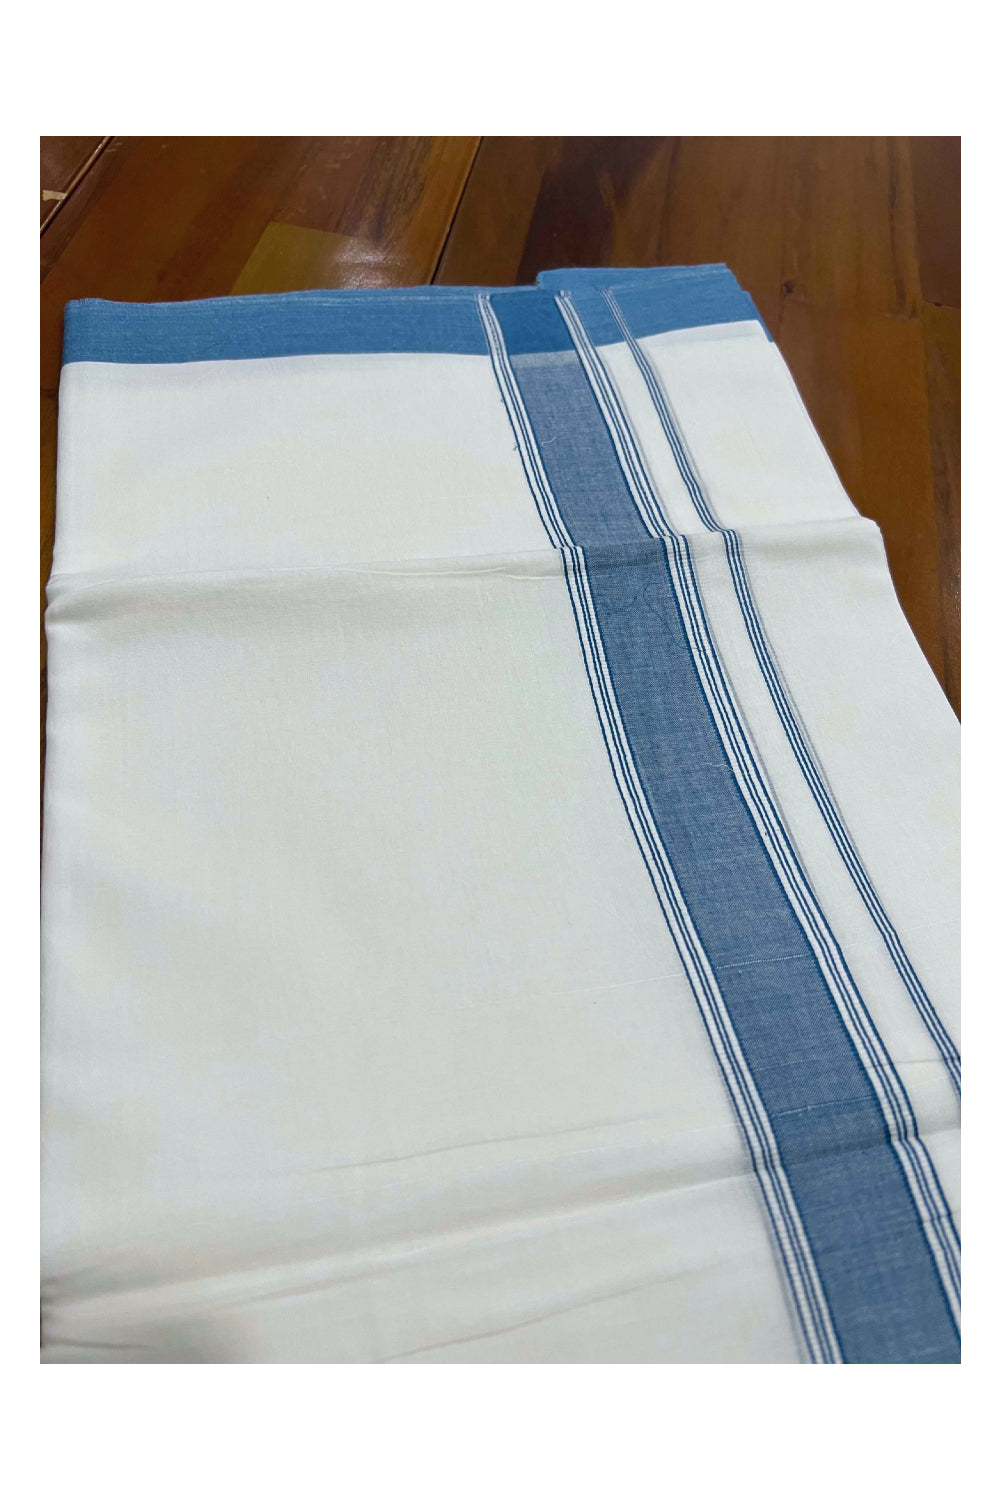 Pure White Cotton Mundu with Light Blue Line Kara (South Indian Dhoti)